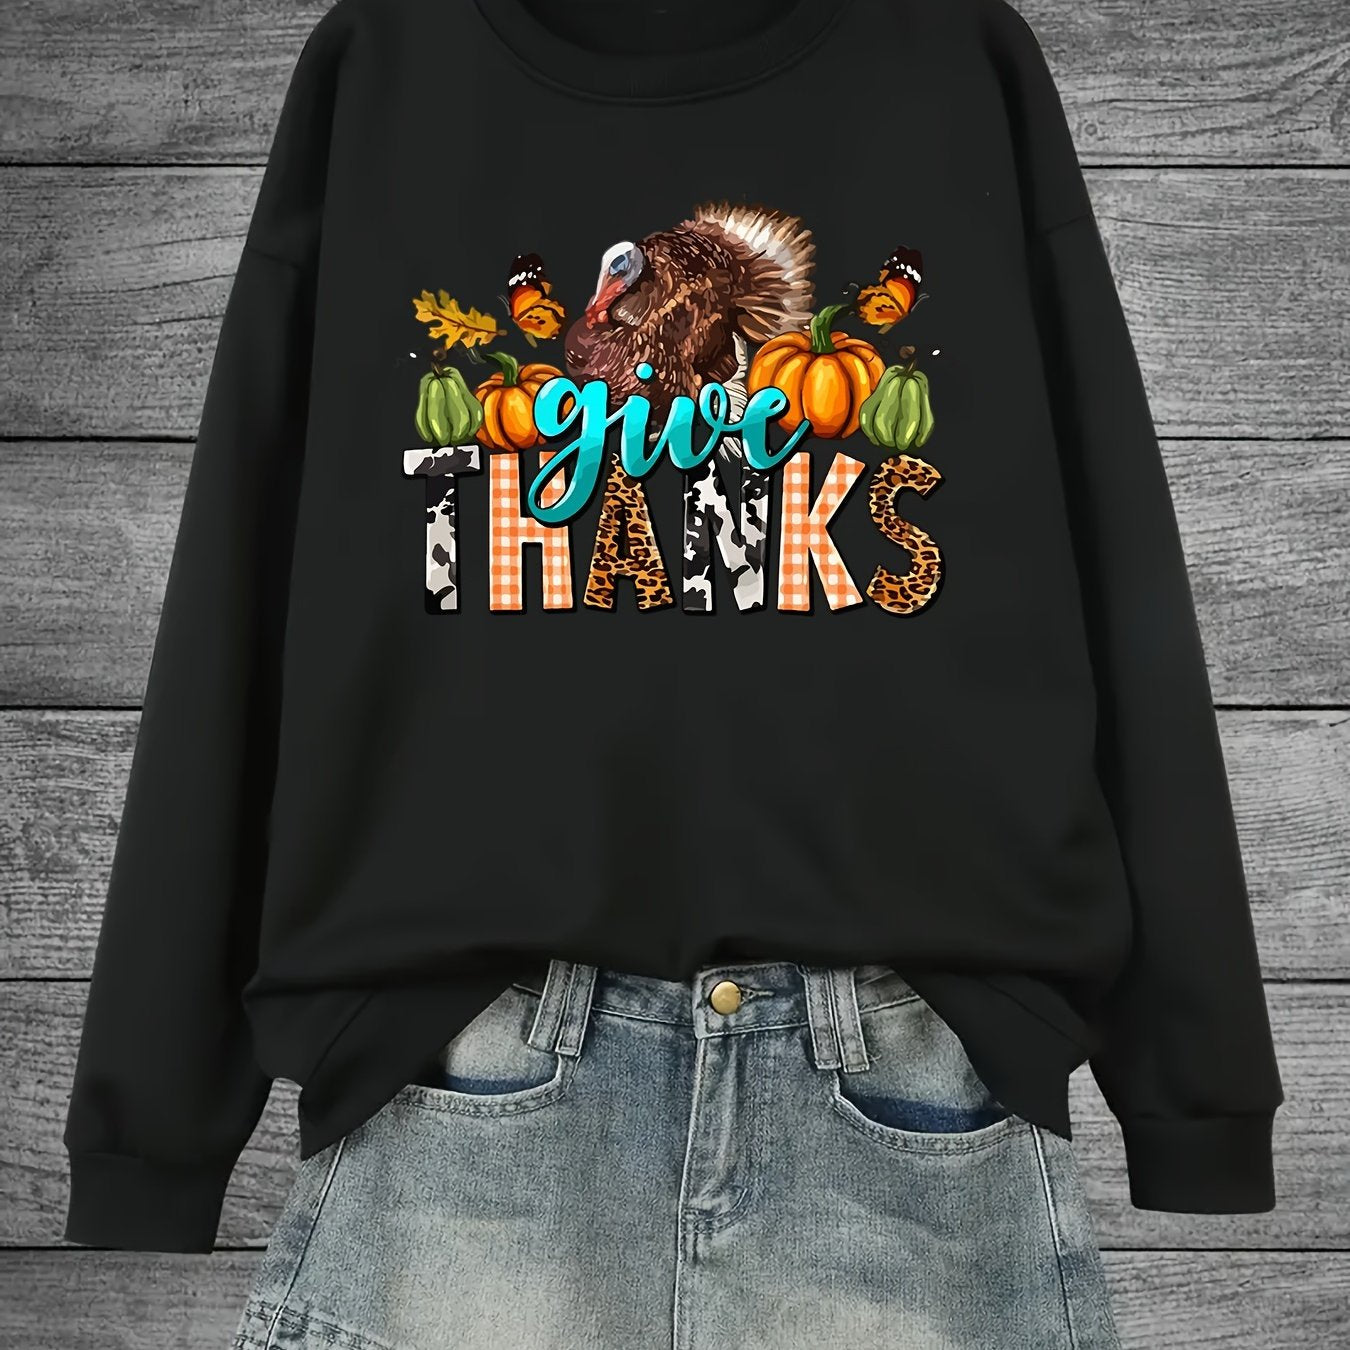 Give Thanks (Thanksgiving themed) Women's Christian Pullover Sweatshirt claimedbygoddesigns